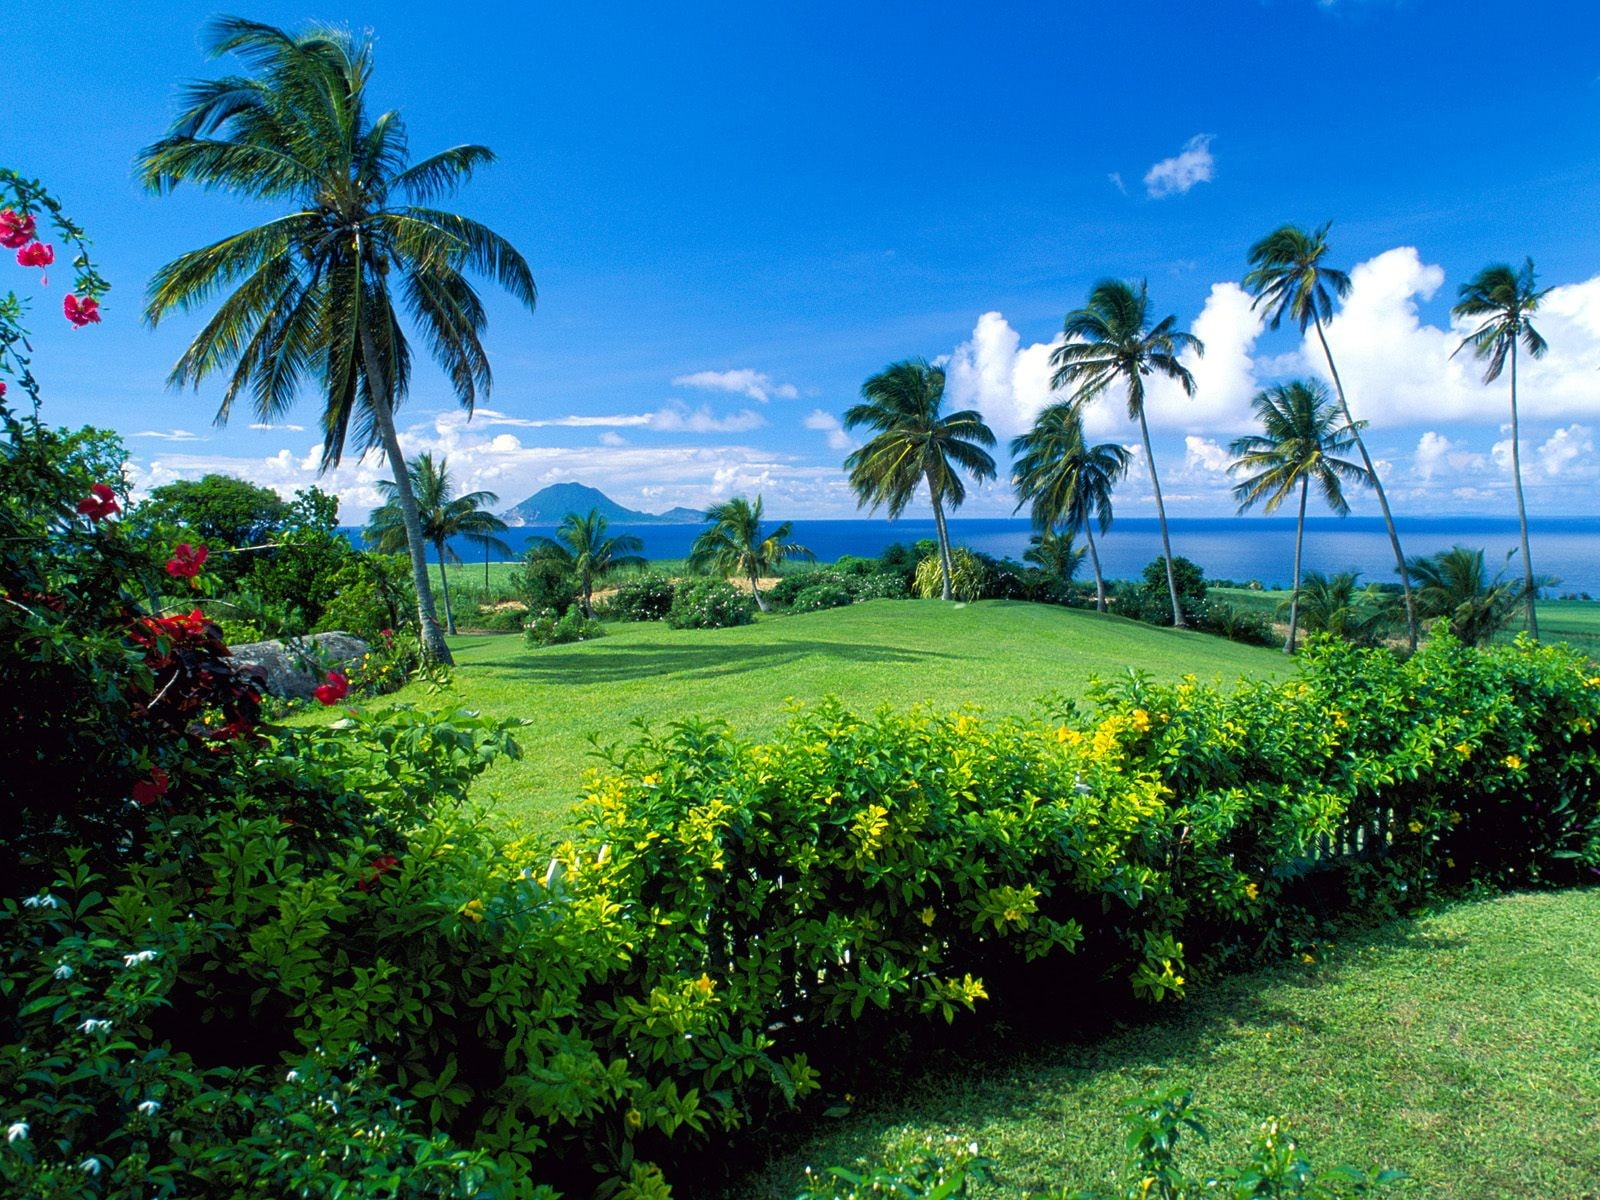 green coconut tree, landscape, palm trees, sky